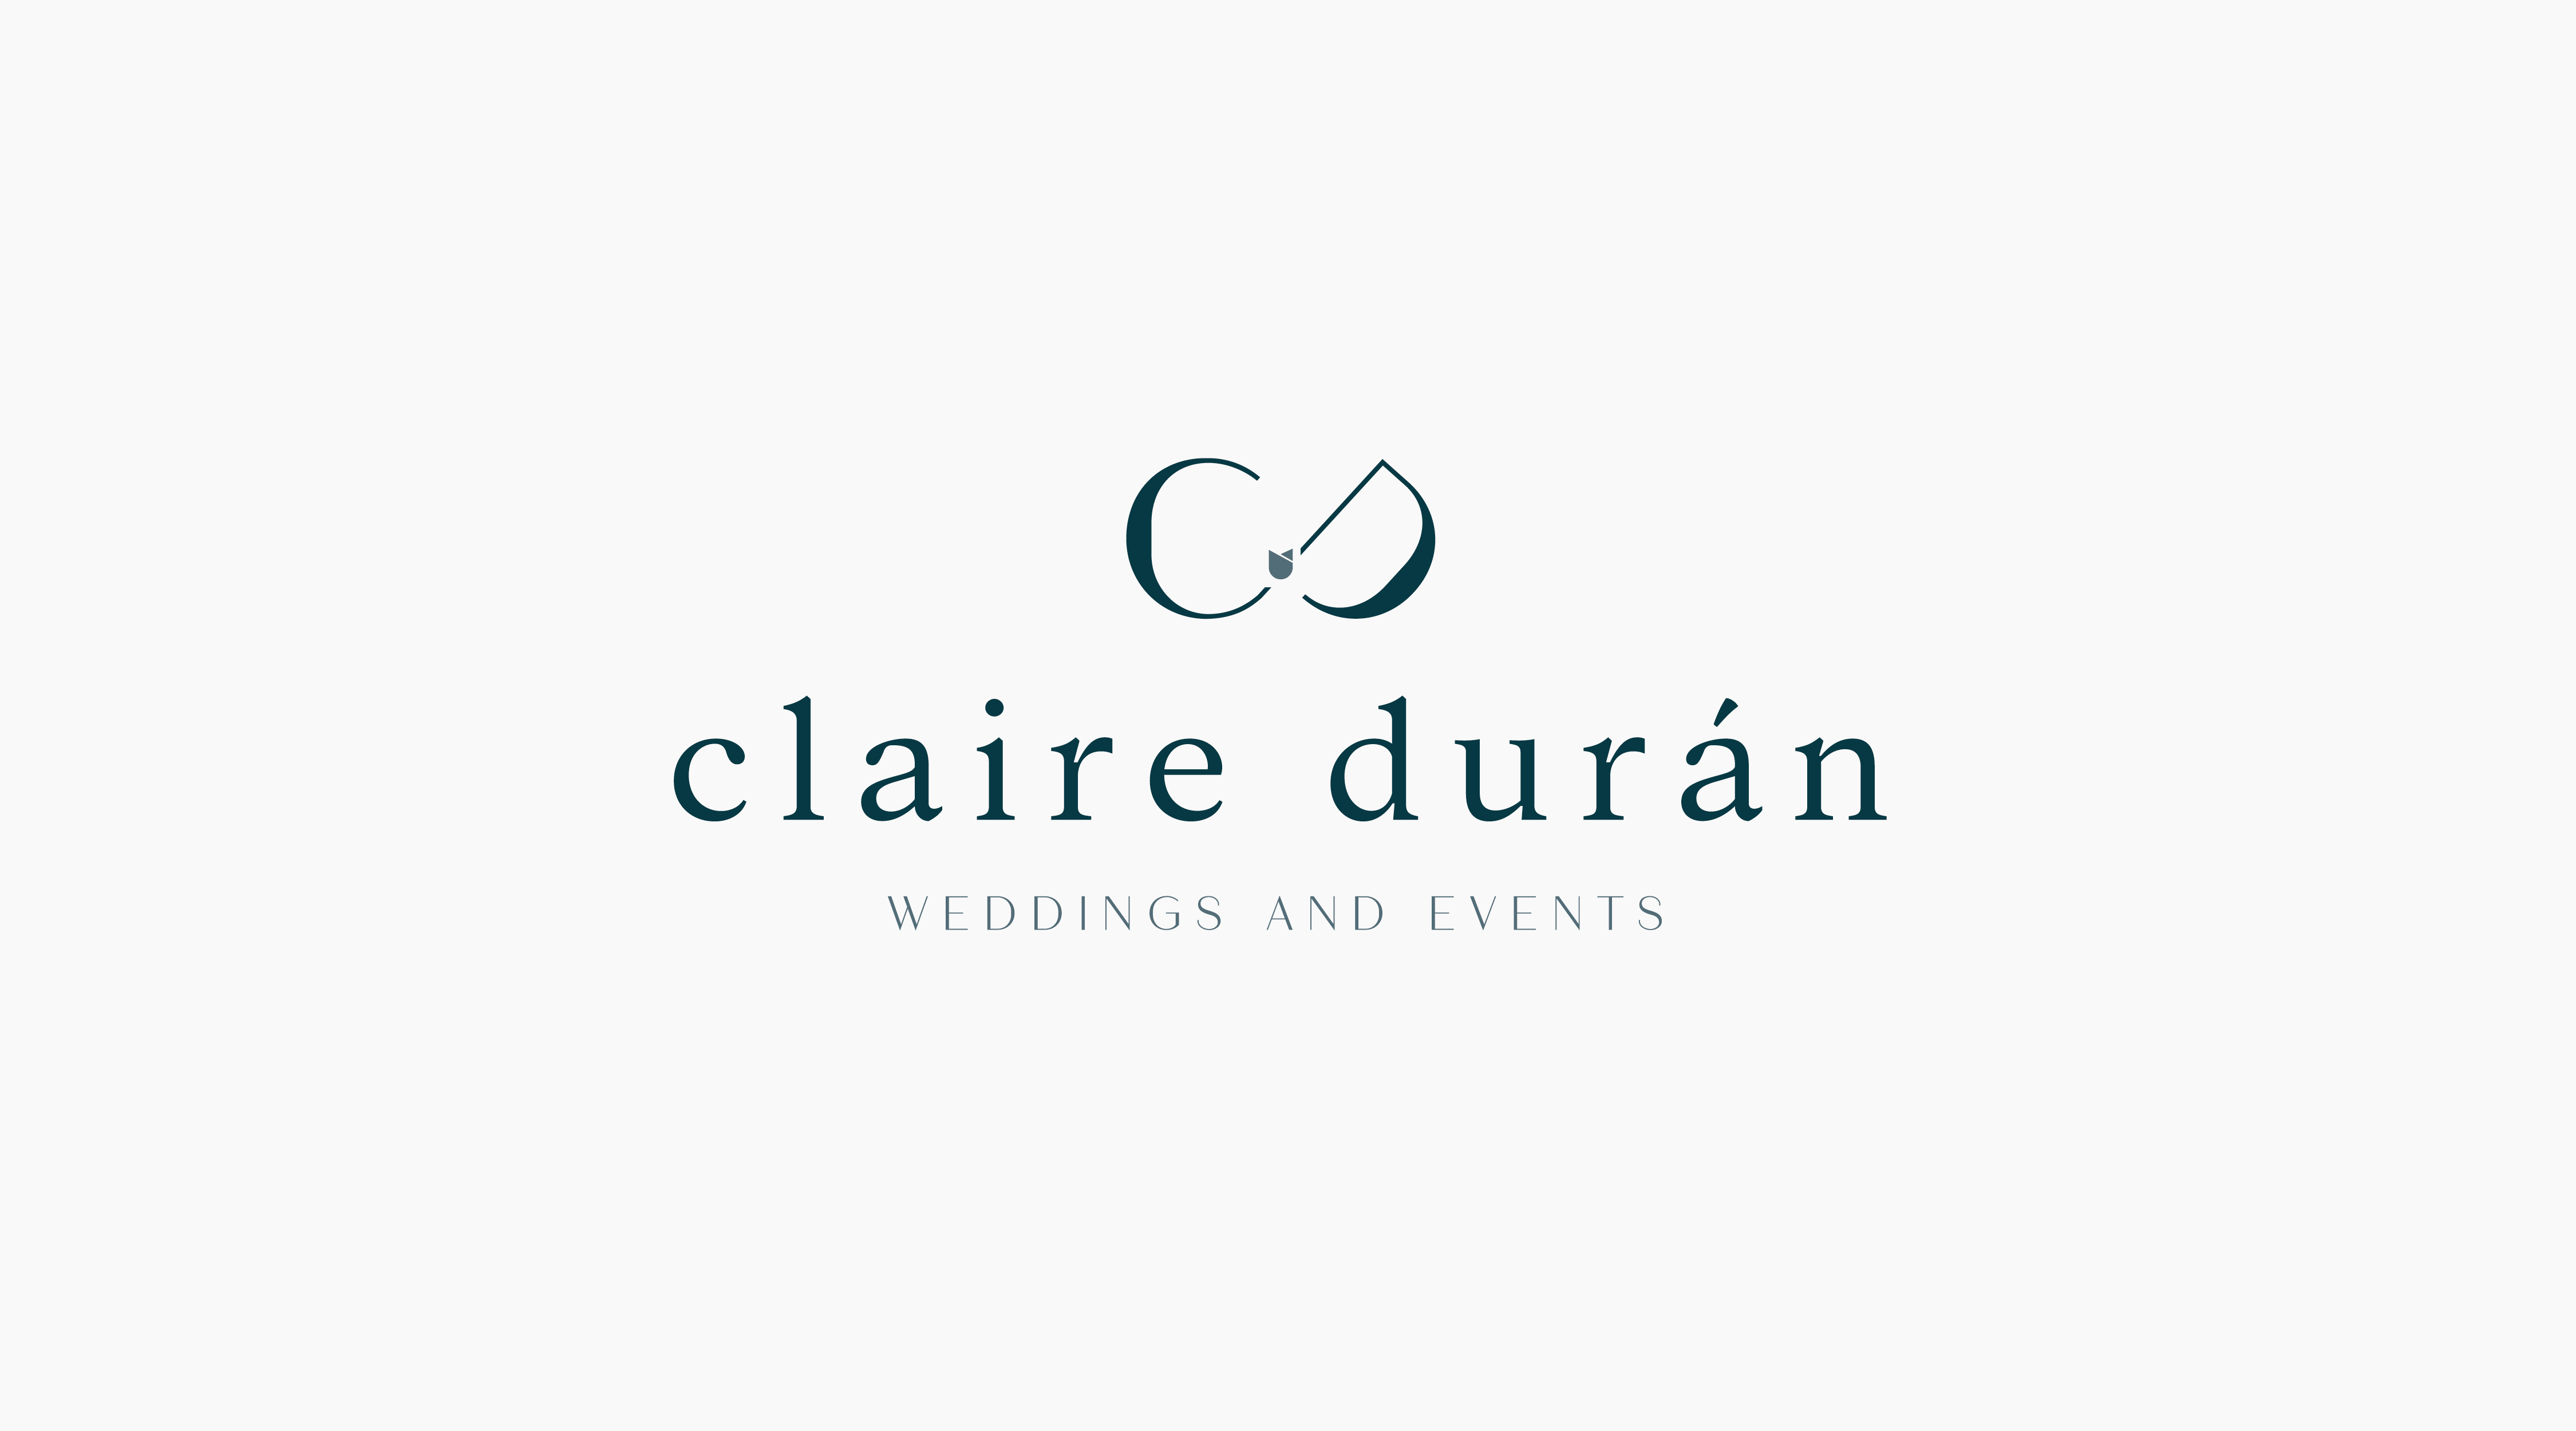 claire duran logo design